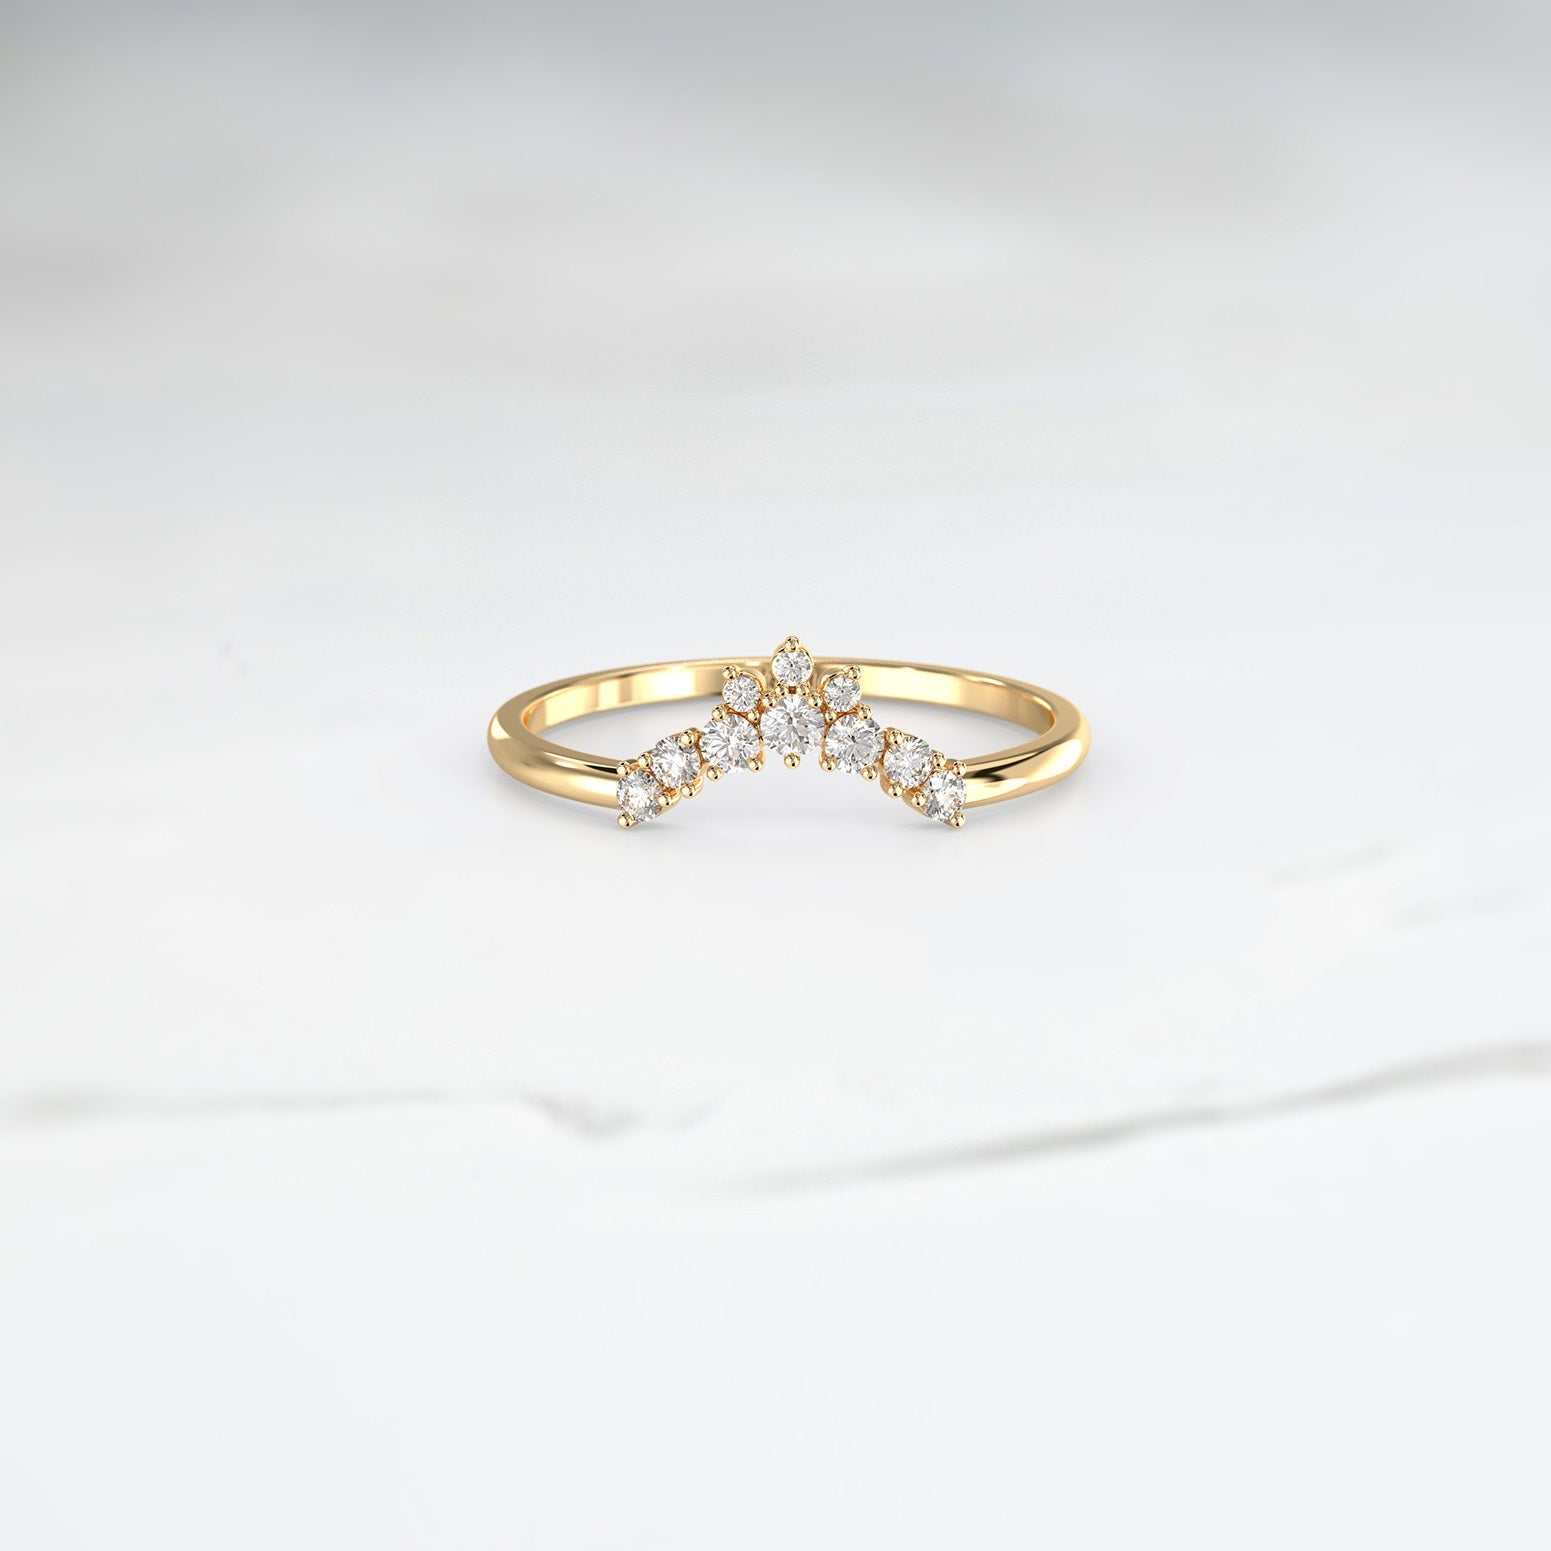 Crown of Keona - Lelya - bespoke engagement and wedding rings made in Scotland, UK